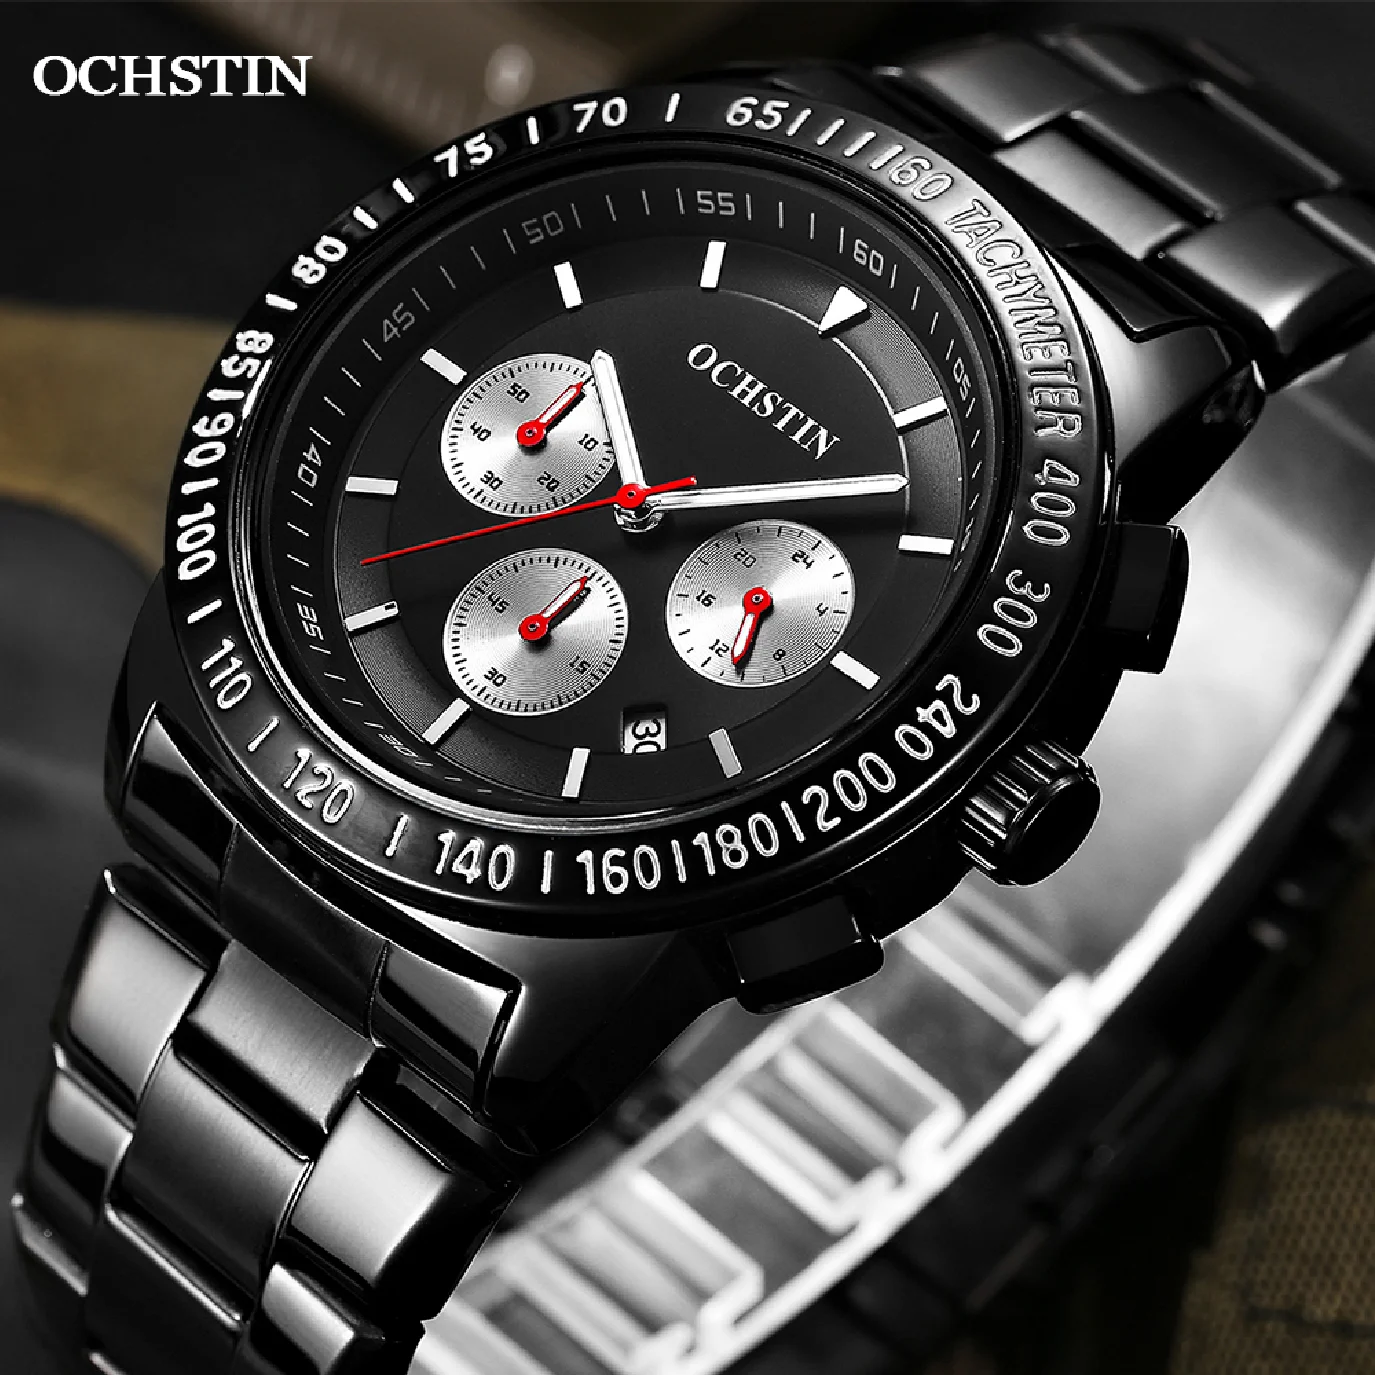 

OCSHTIN Modern Men's Watches 2021 Pilot Quartz Chronograph Wristwatch Casual Luxury Date Display Clock Gifts For Male GQ6108